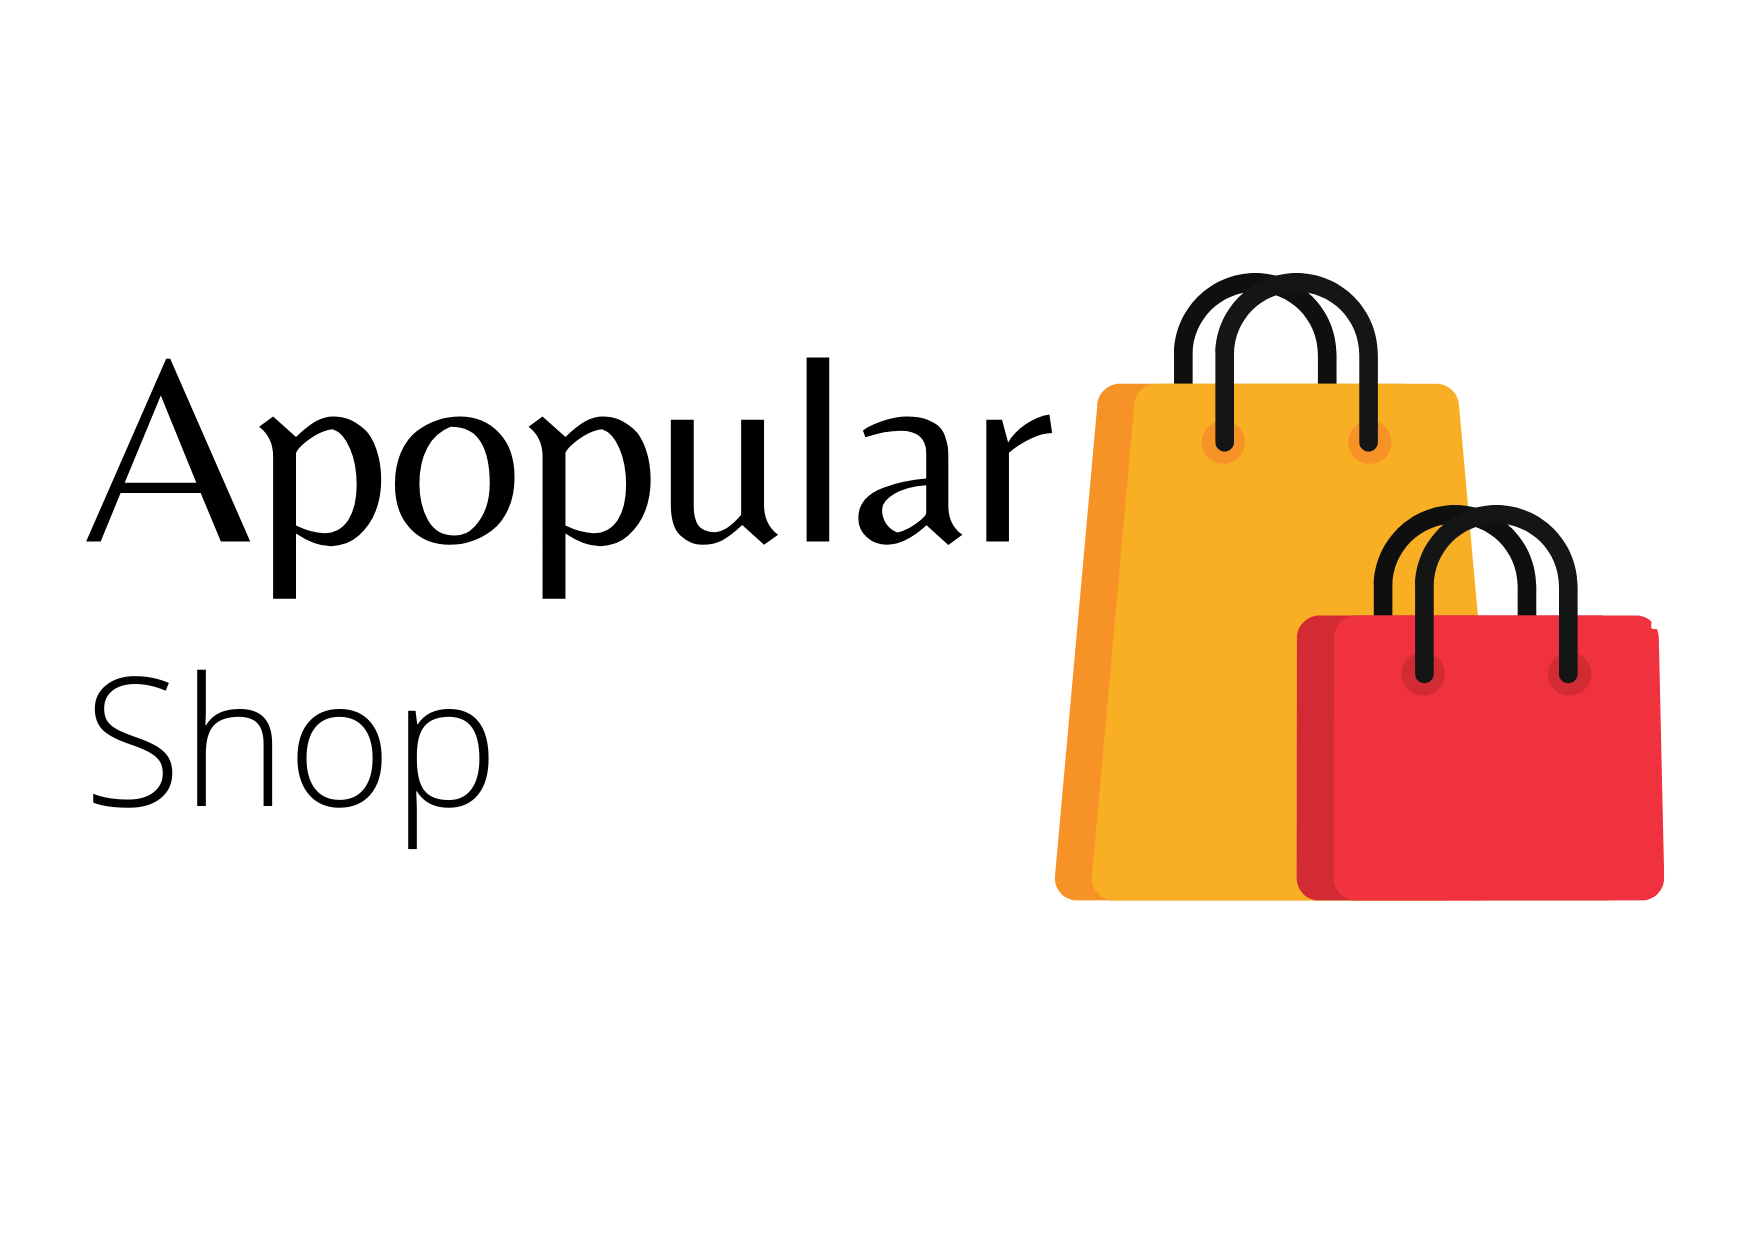 Apopular Shop